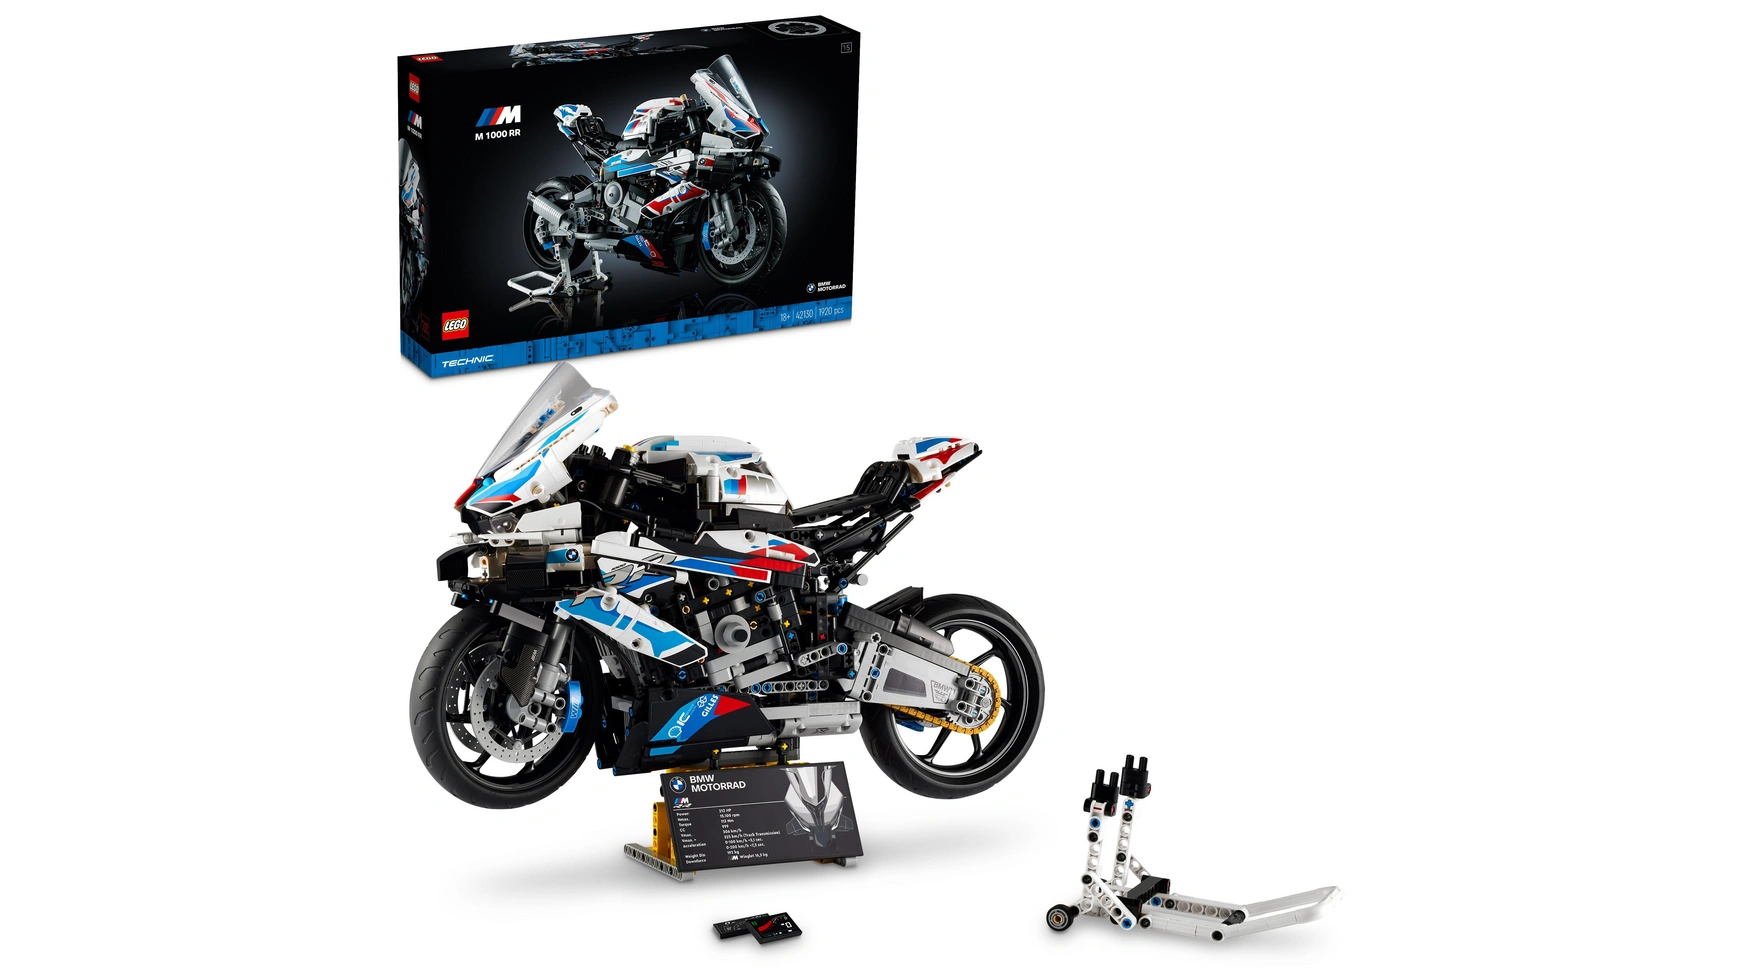 Lego Technic BMW M 1000 RR, модель мотоцикла для взрослых lego technic bmw m 1000 rr модель мотоцикла для взрослых